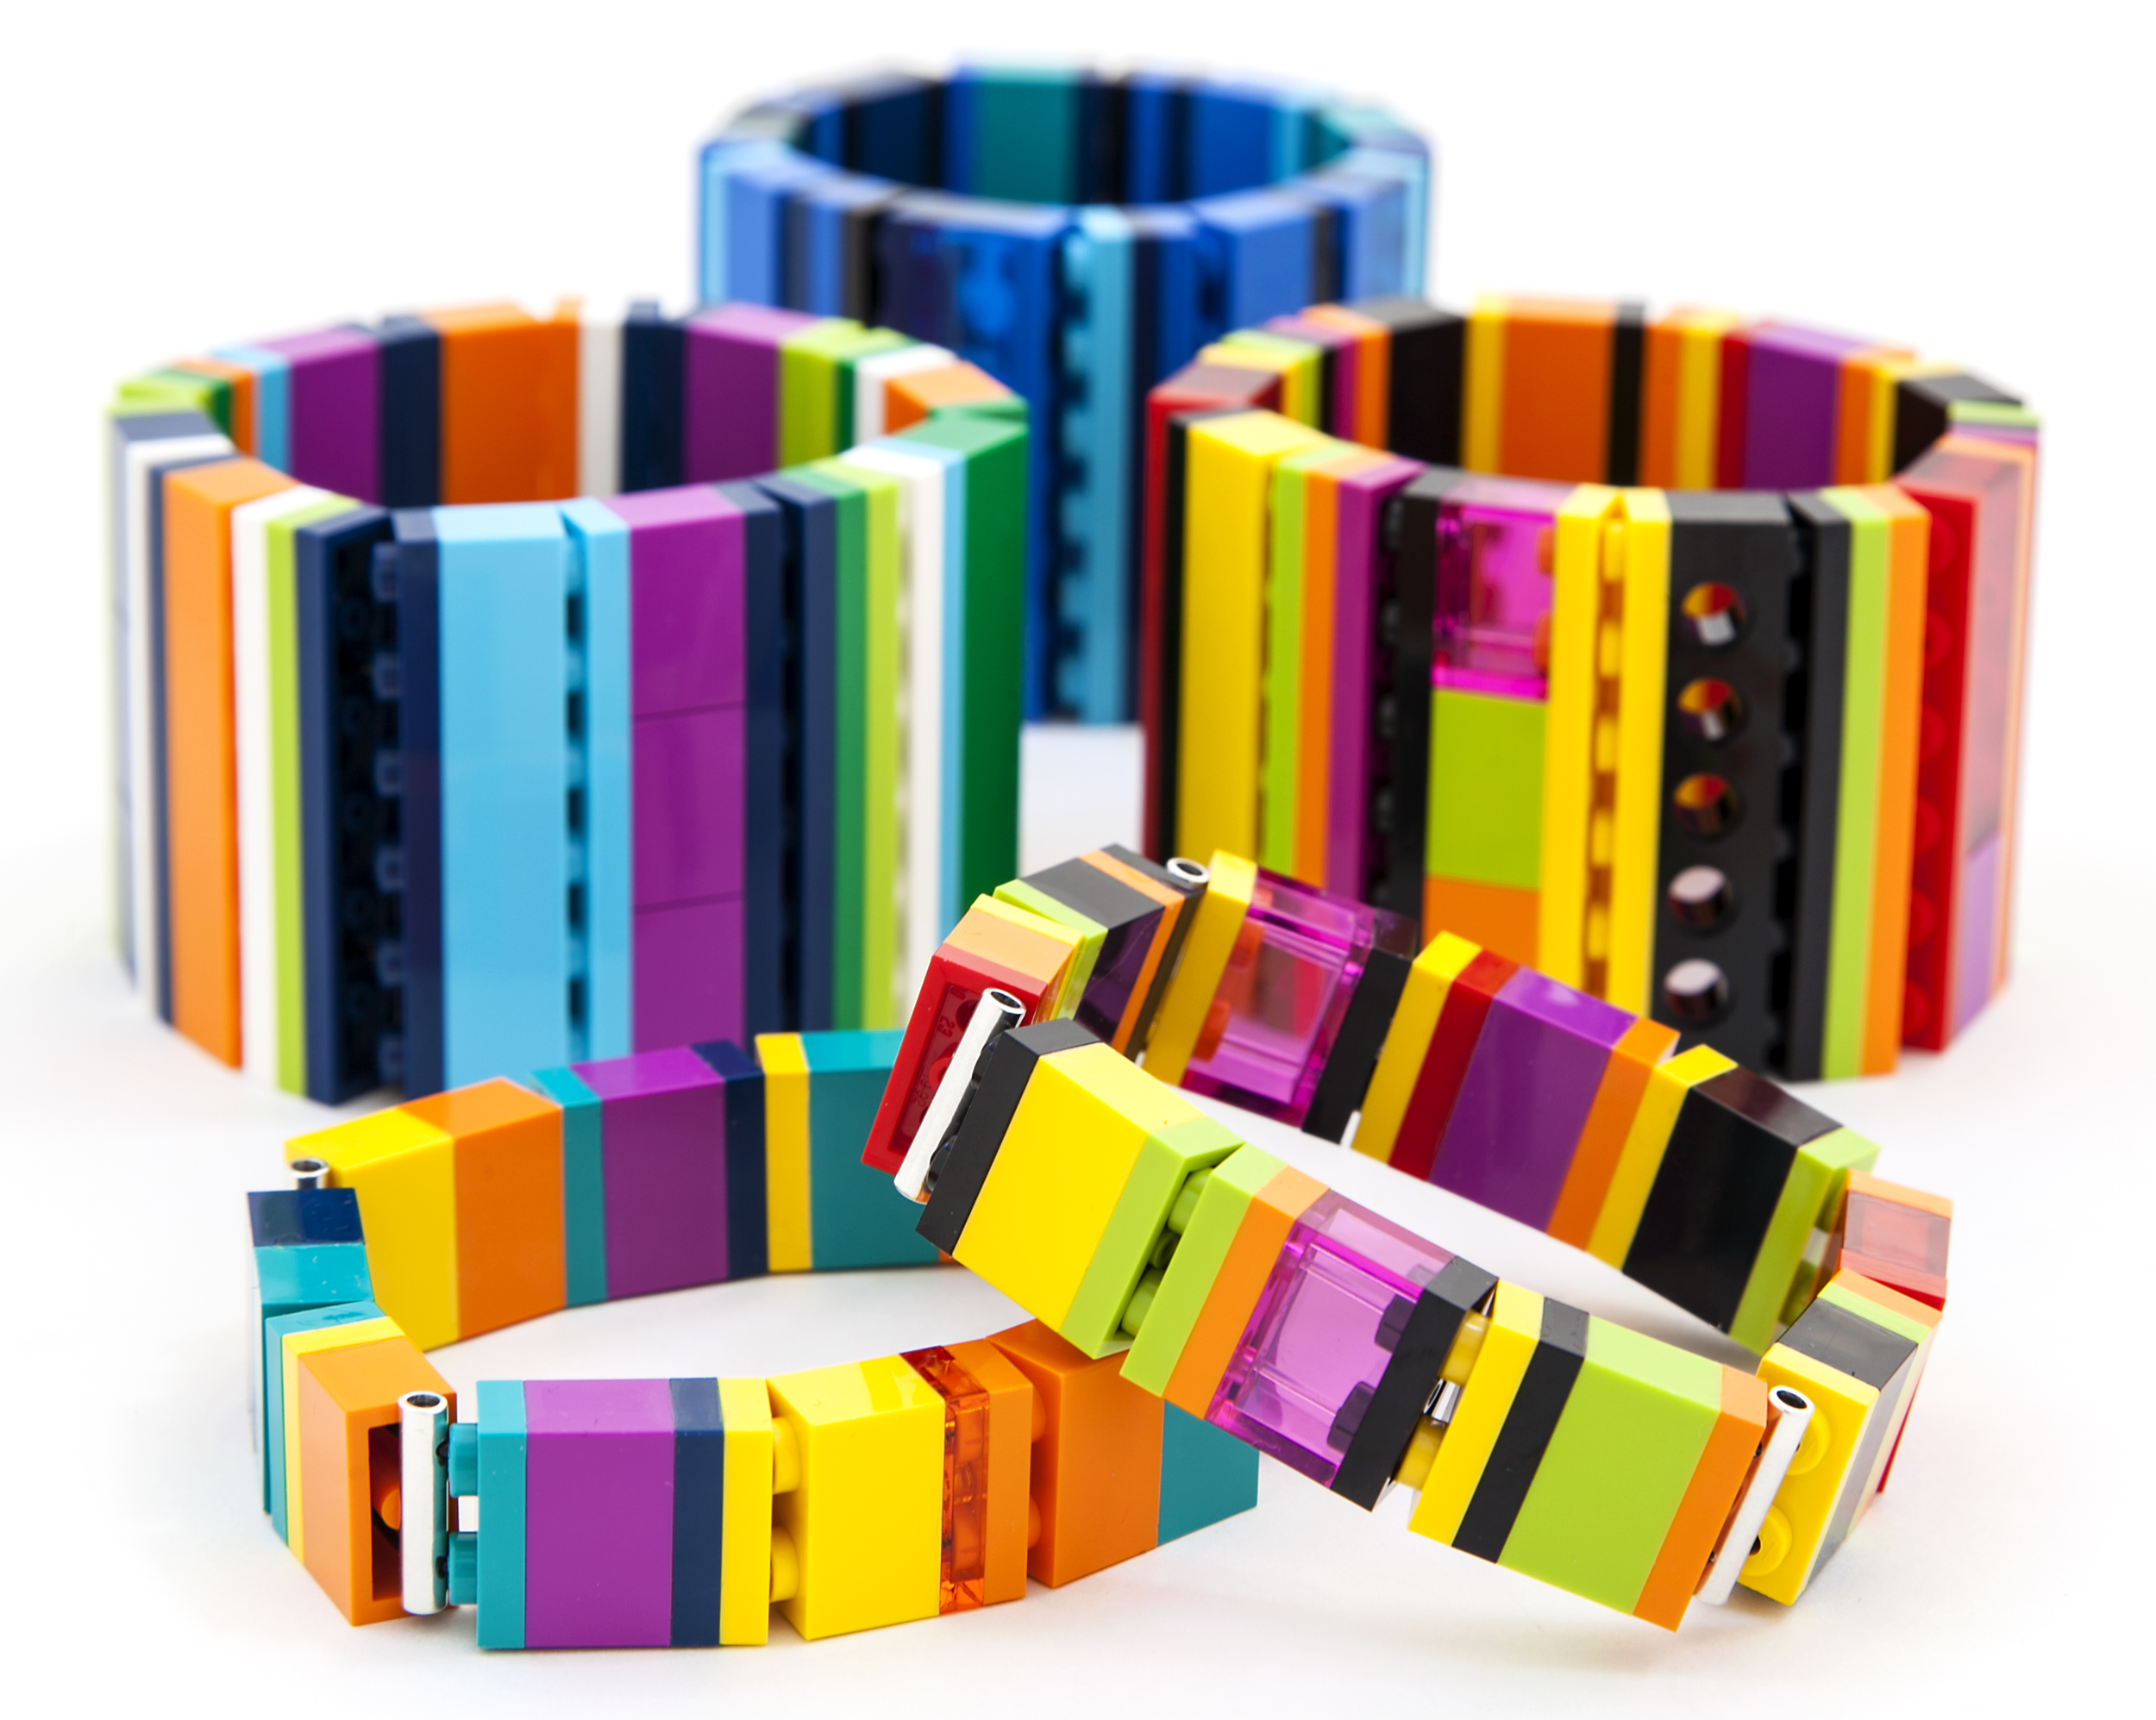  emiko's best sellers, the reware bracelet collection 